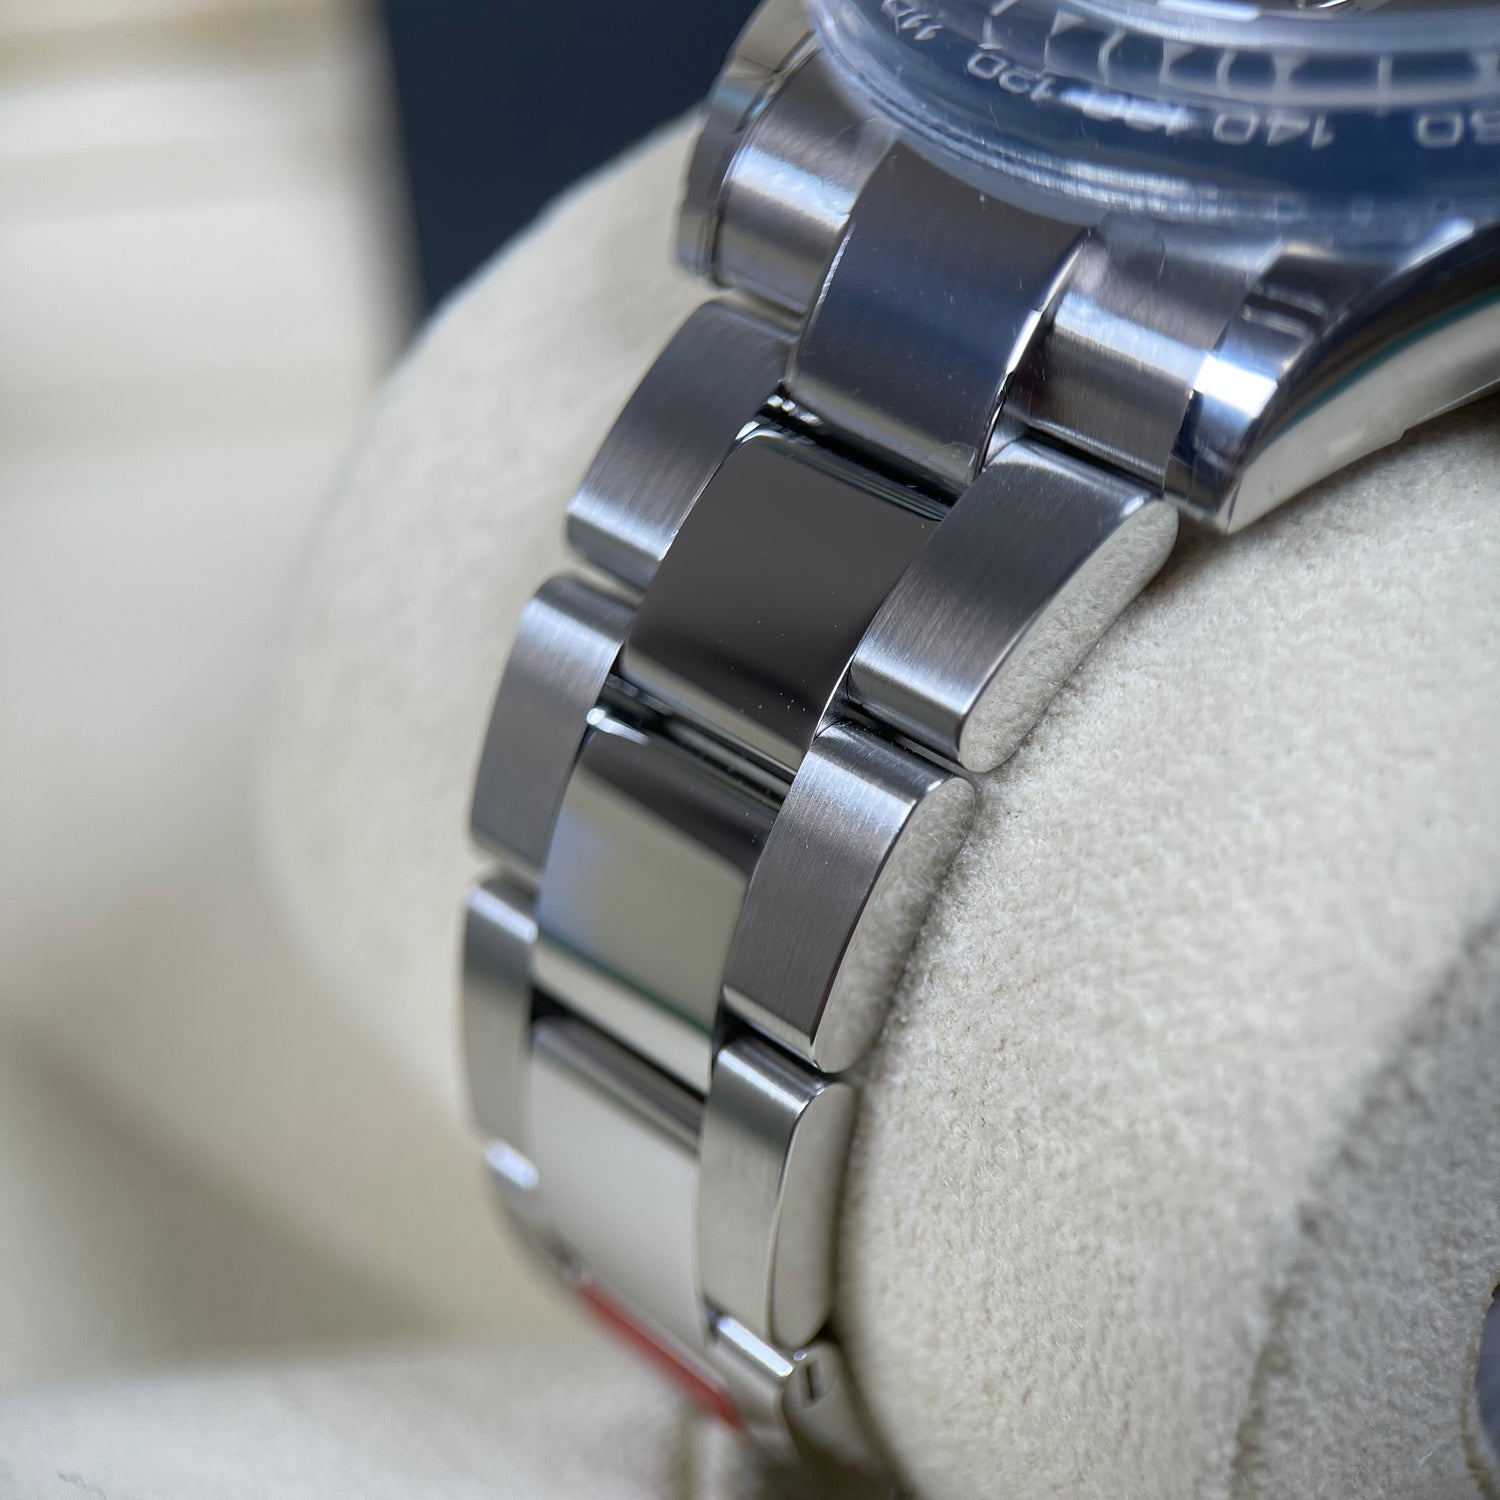 Rolex Cosmograph Daytona Ceramic Black Dial 116500LN 2021 Full Stickers Brand New Watch